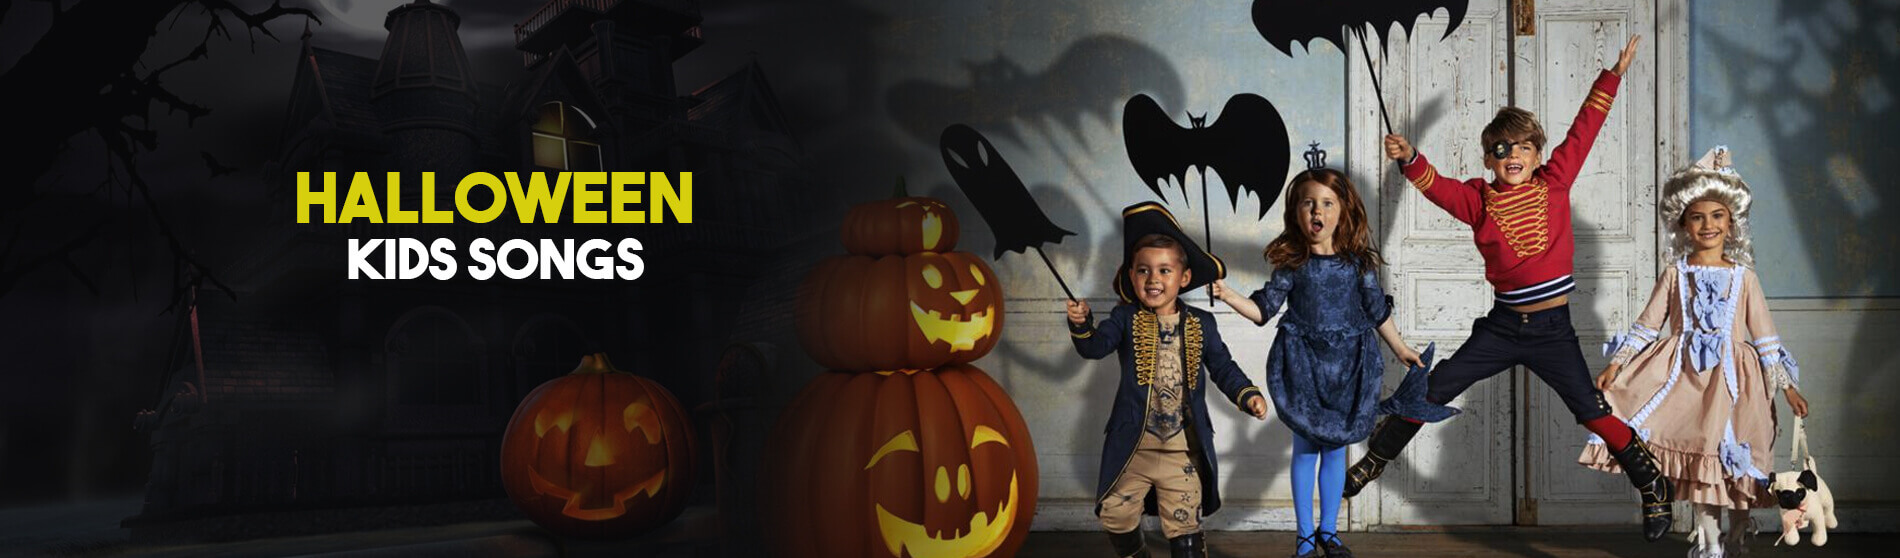 Glendale Halloween : Halloween-Kids-Songs